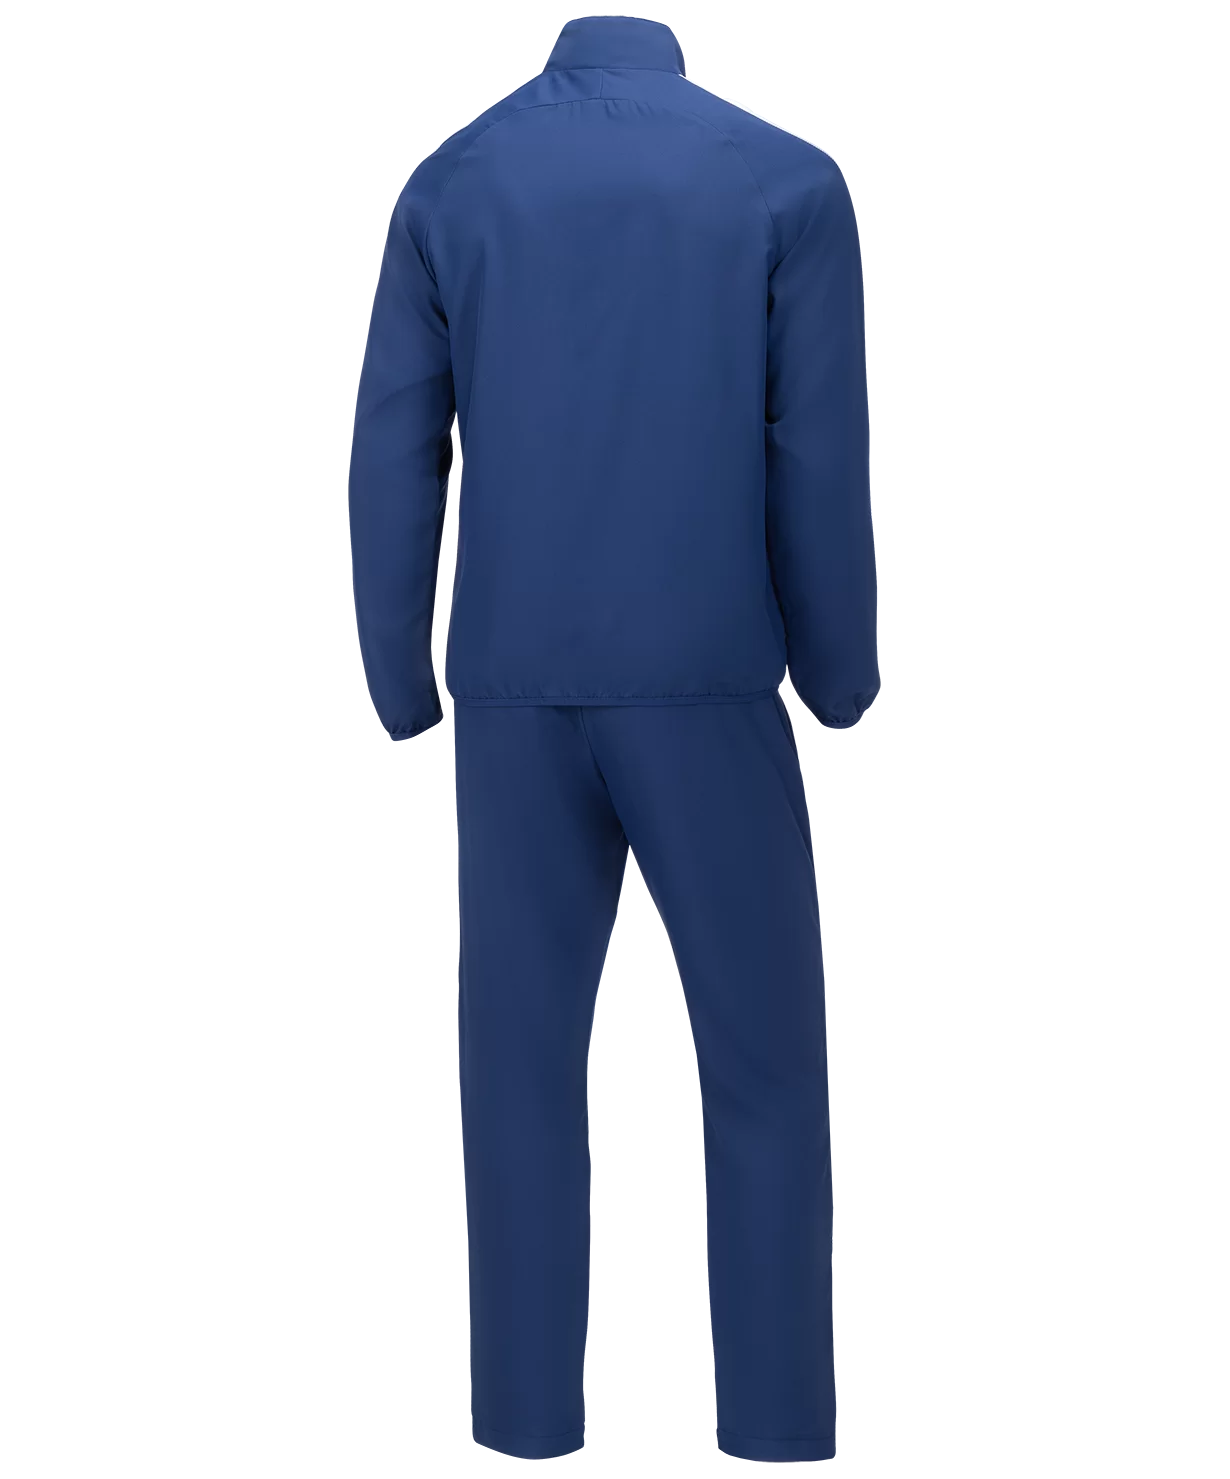 Реальное фото Костюм спортивный CAMP Lined Suit, темно-синий/темно-синий от магазина СпортСЕ